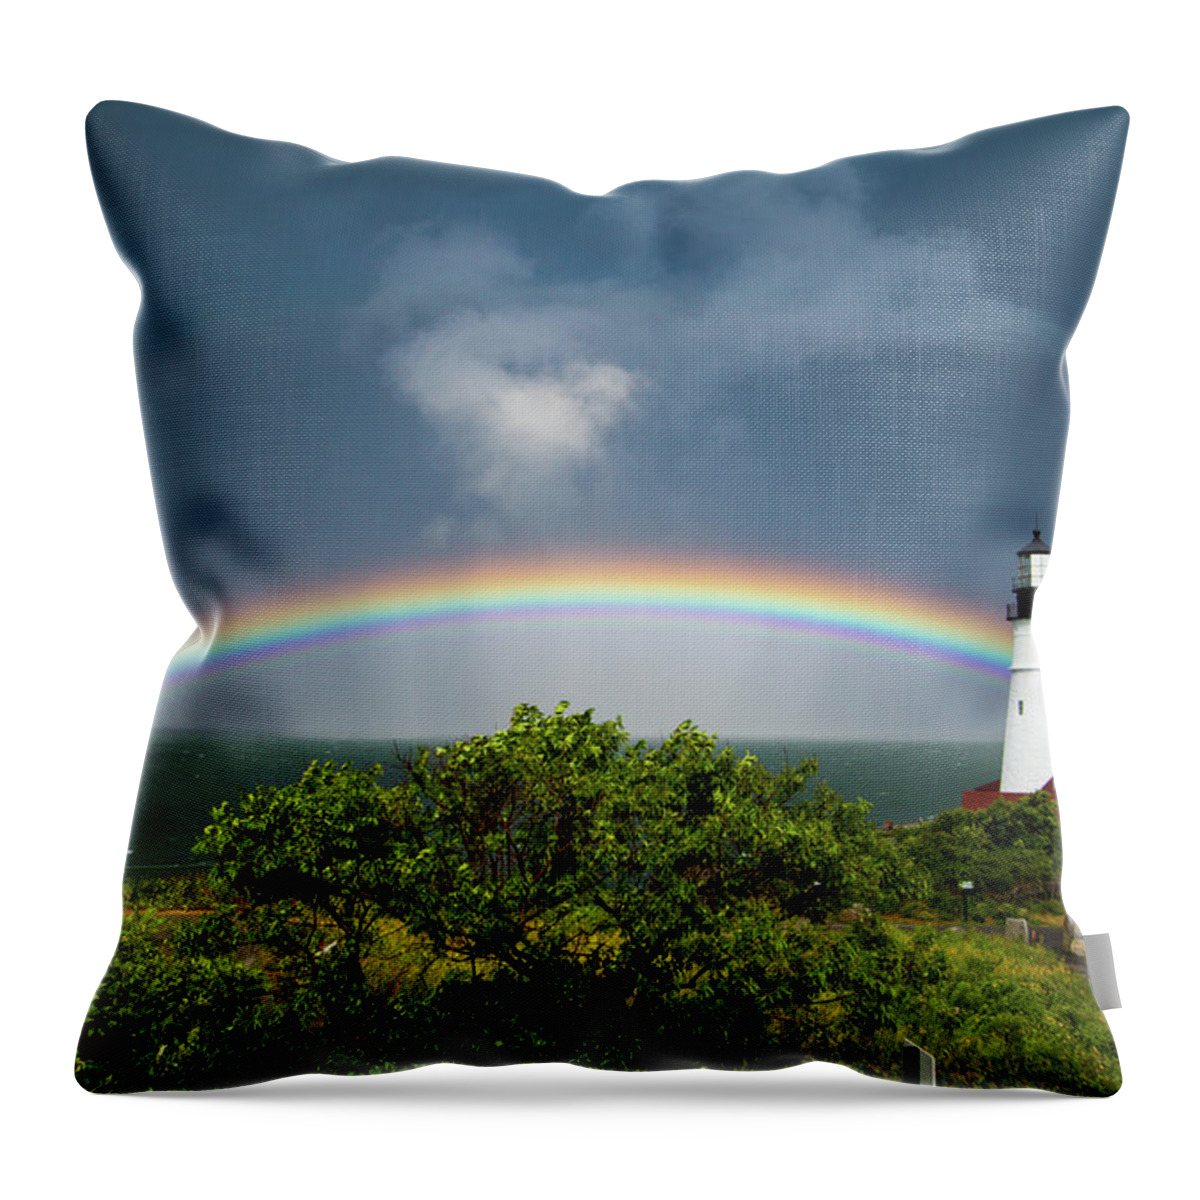 Portland Headlight Throw Pillow featuring the photograph Rainbow at Portland Headlight by Darryl Hendricks